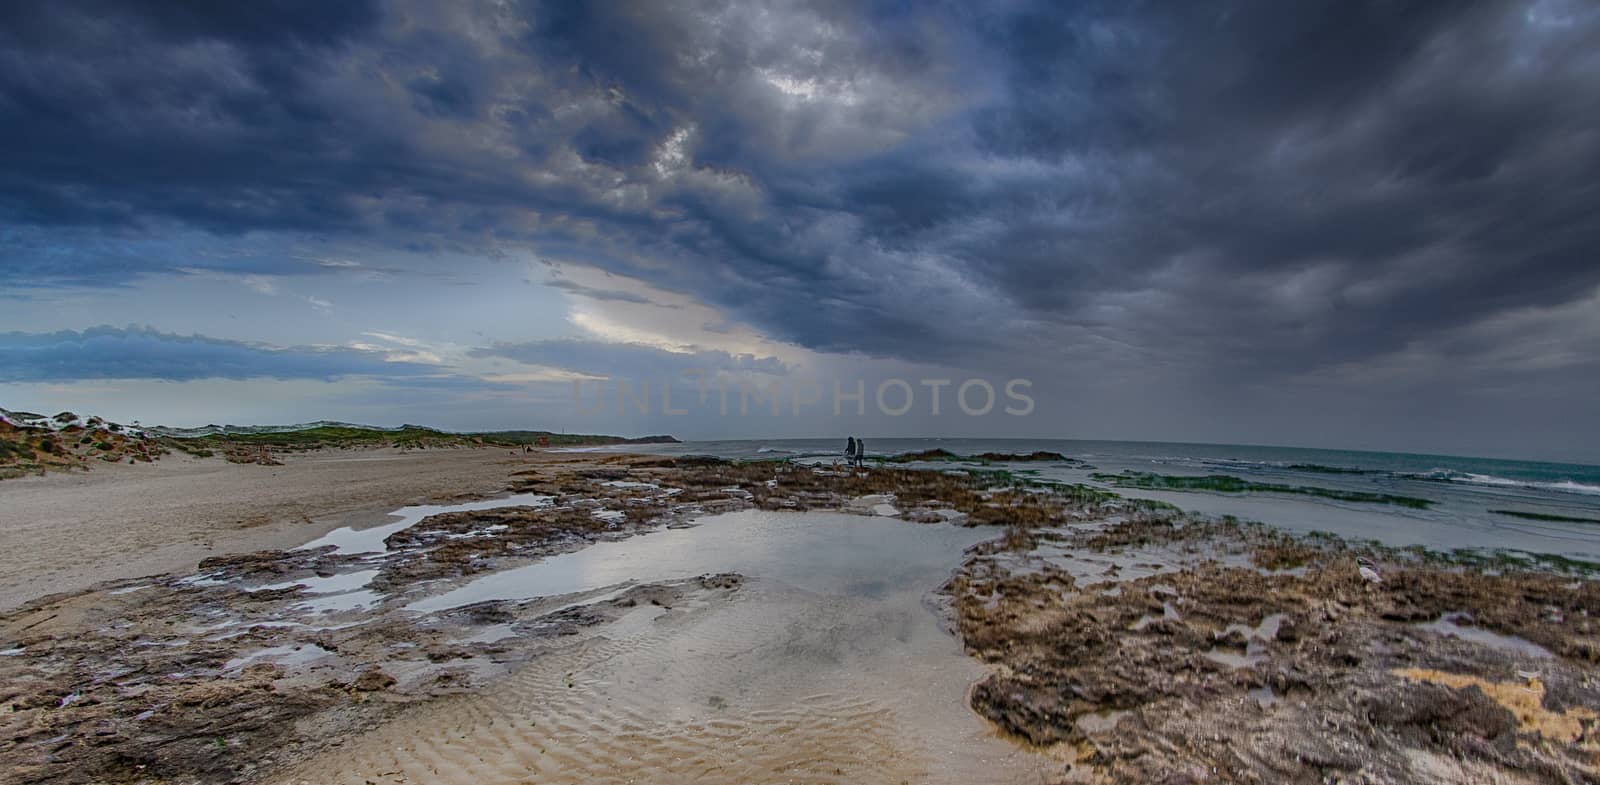 Stormy weather on Palmachim beach of Israel